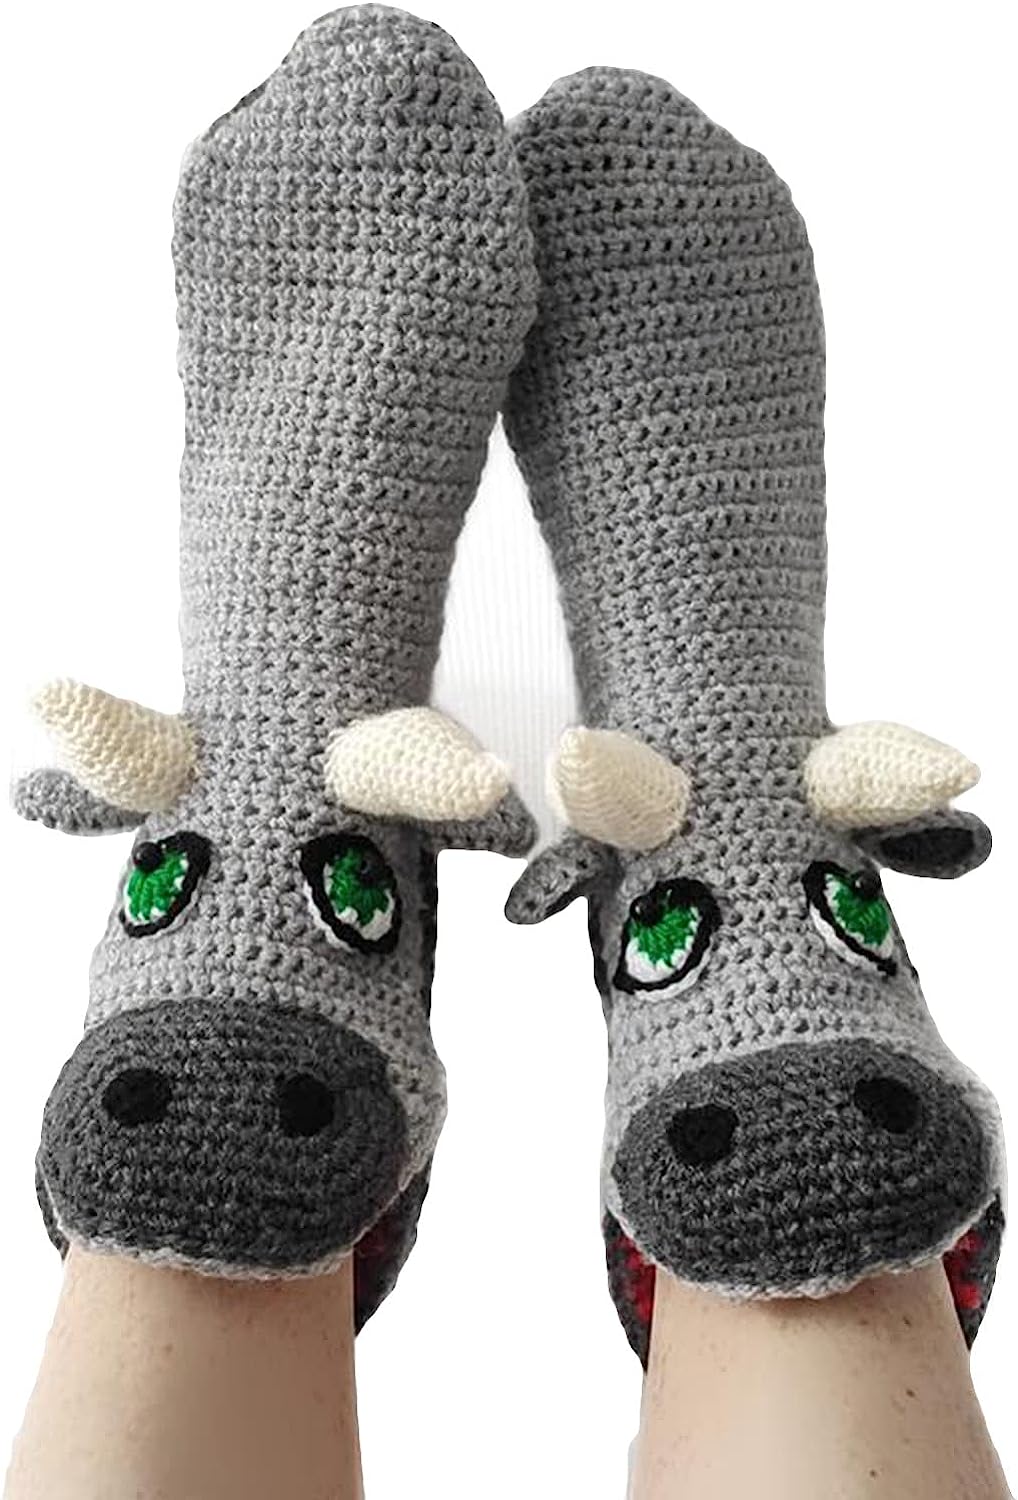 THATLILSHOP One Size / Cow Gray Women Men Novelty Animal Pattern Socks Crazy Funny Knit Crocodile Socks Funny Gifts